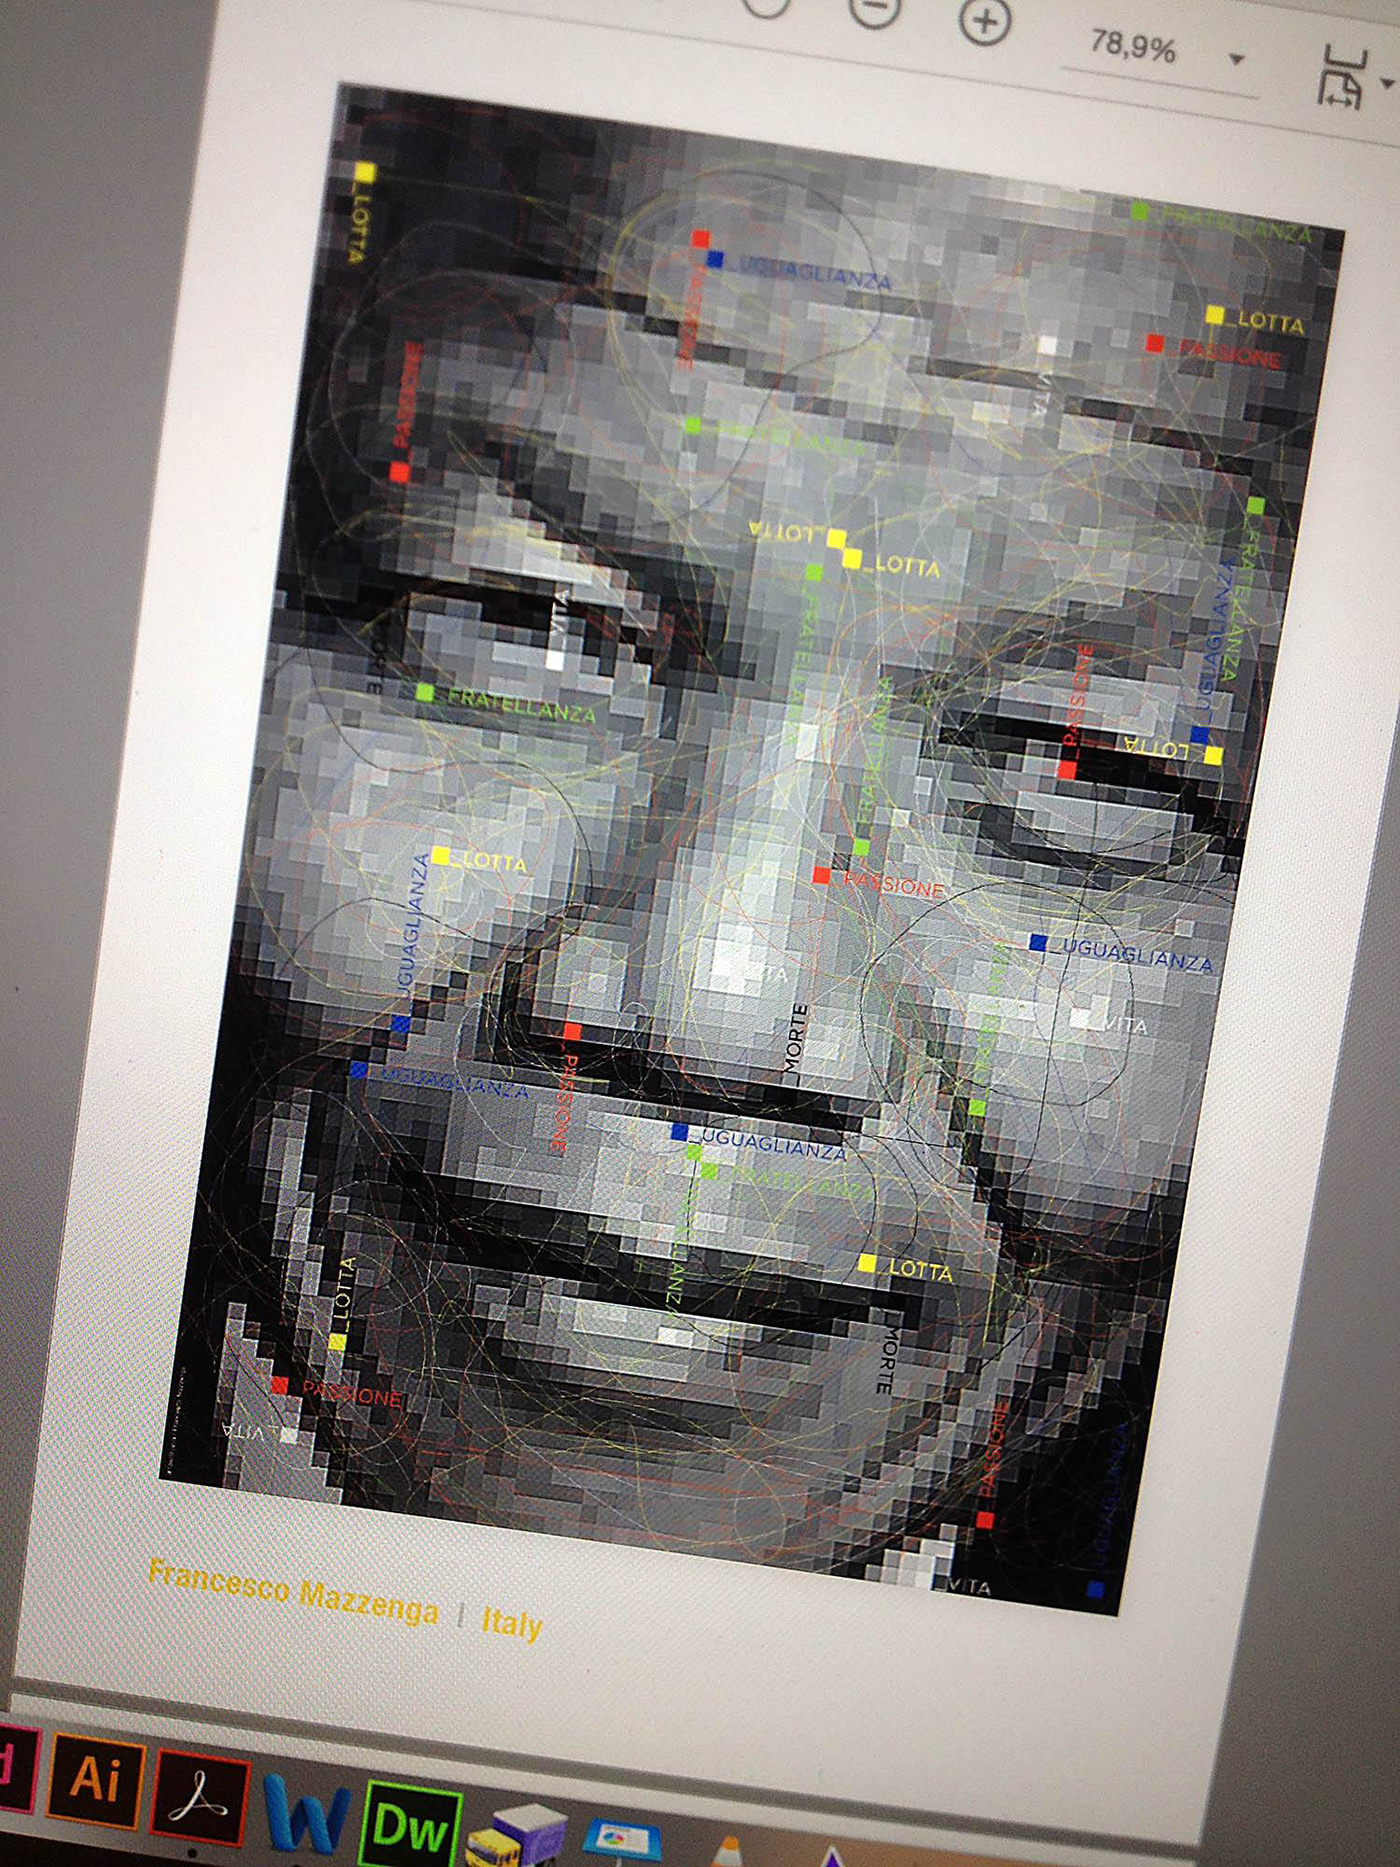 Mandela madiba journals poster design Francesco Mazzenga